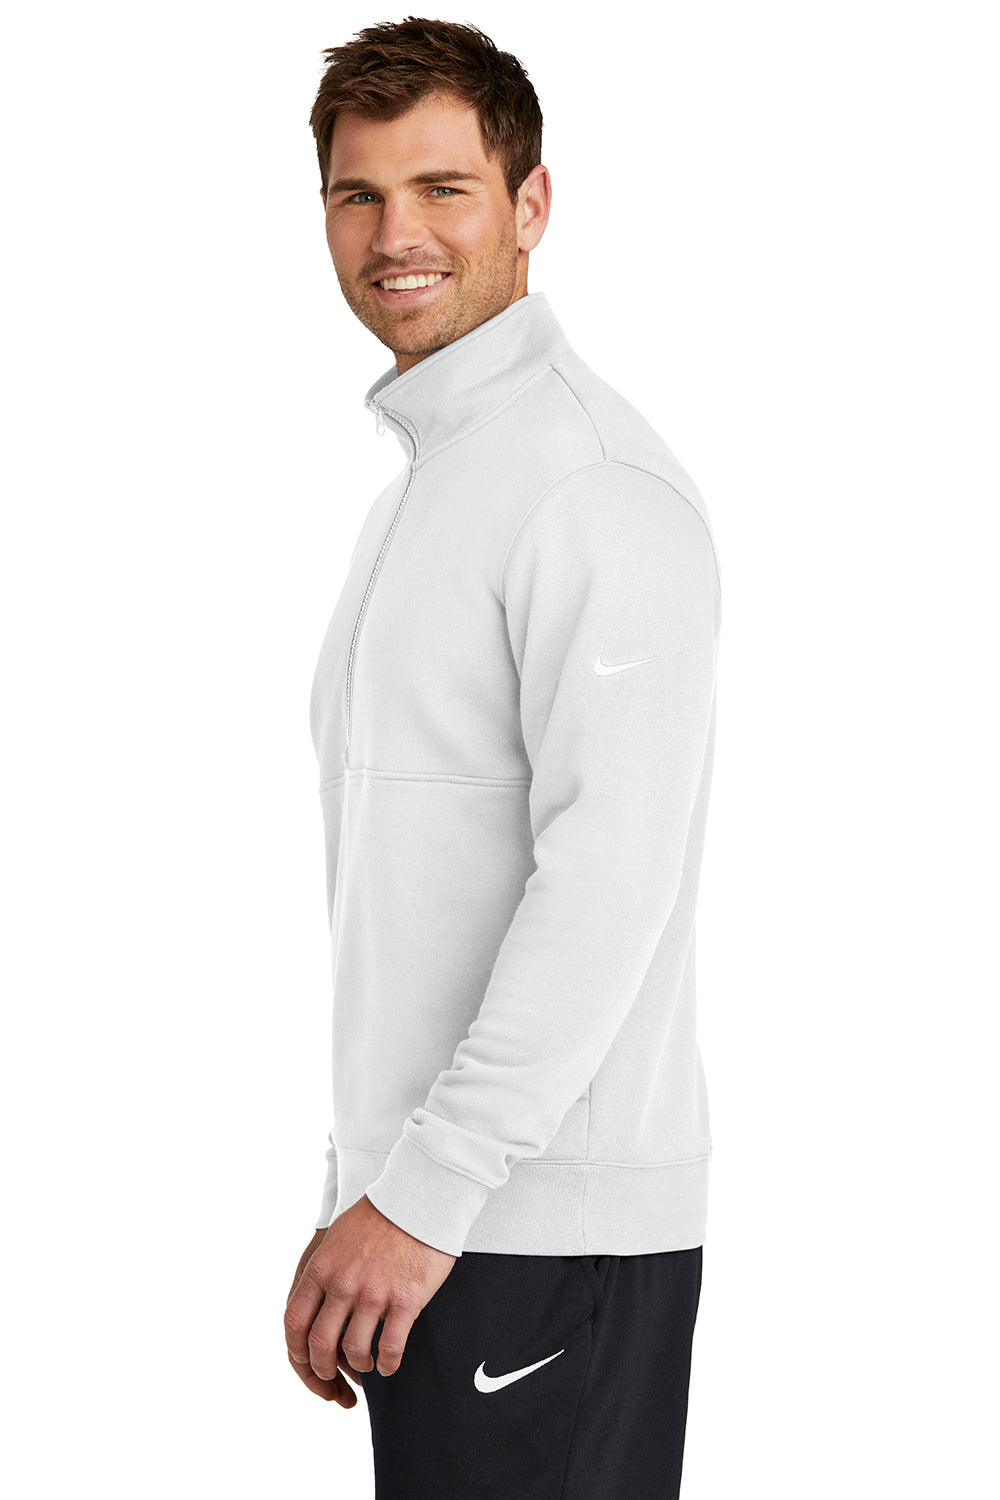 Nike NKDX6718 Mens Club Fleece 1/4 Zip Sweatshirt White Model Side